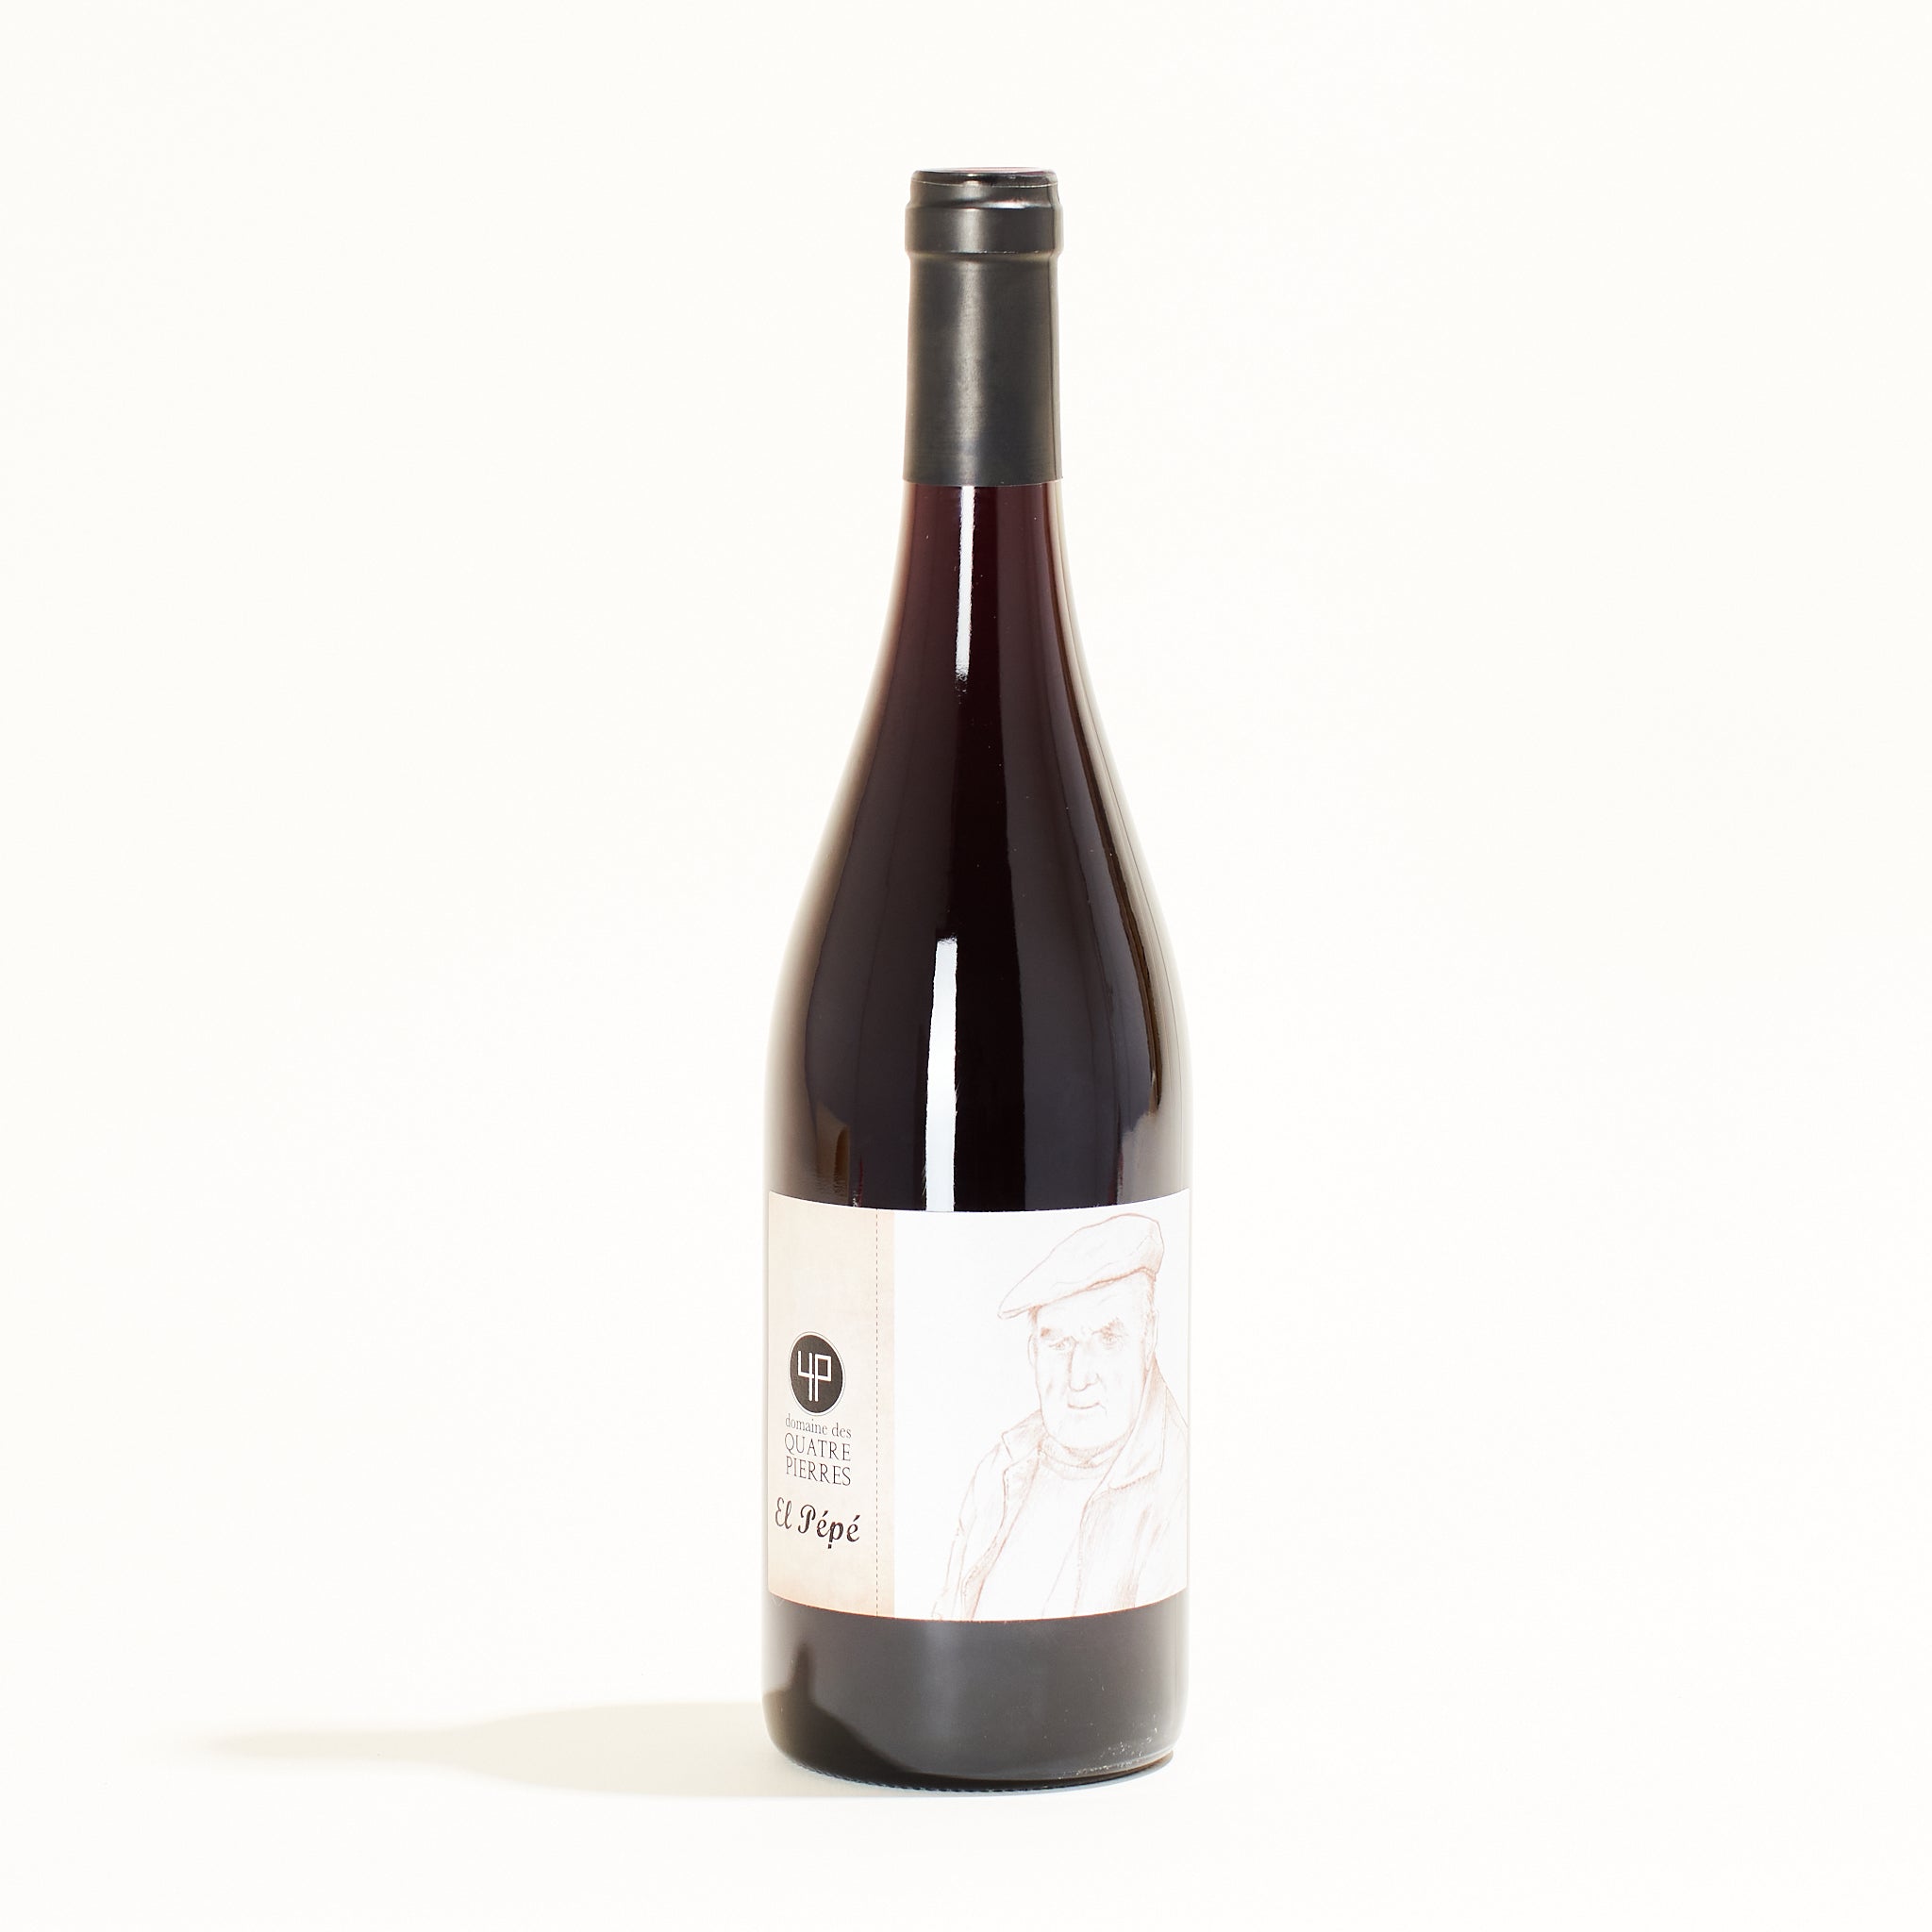 Domaine des Quatre Pierres El Pepe Carignan natural red wine Languedoc France front label